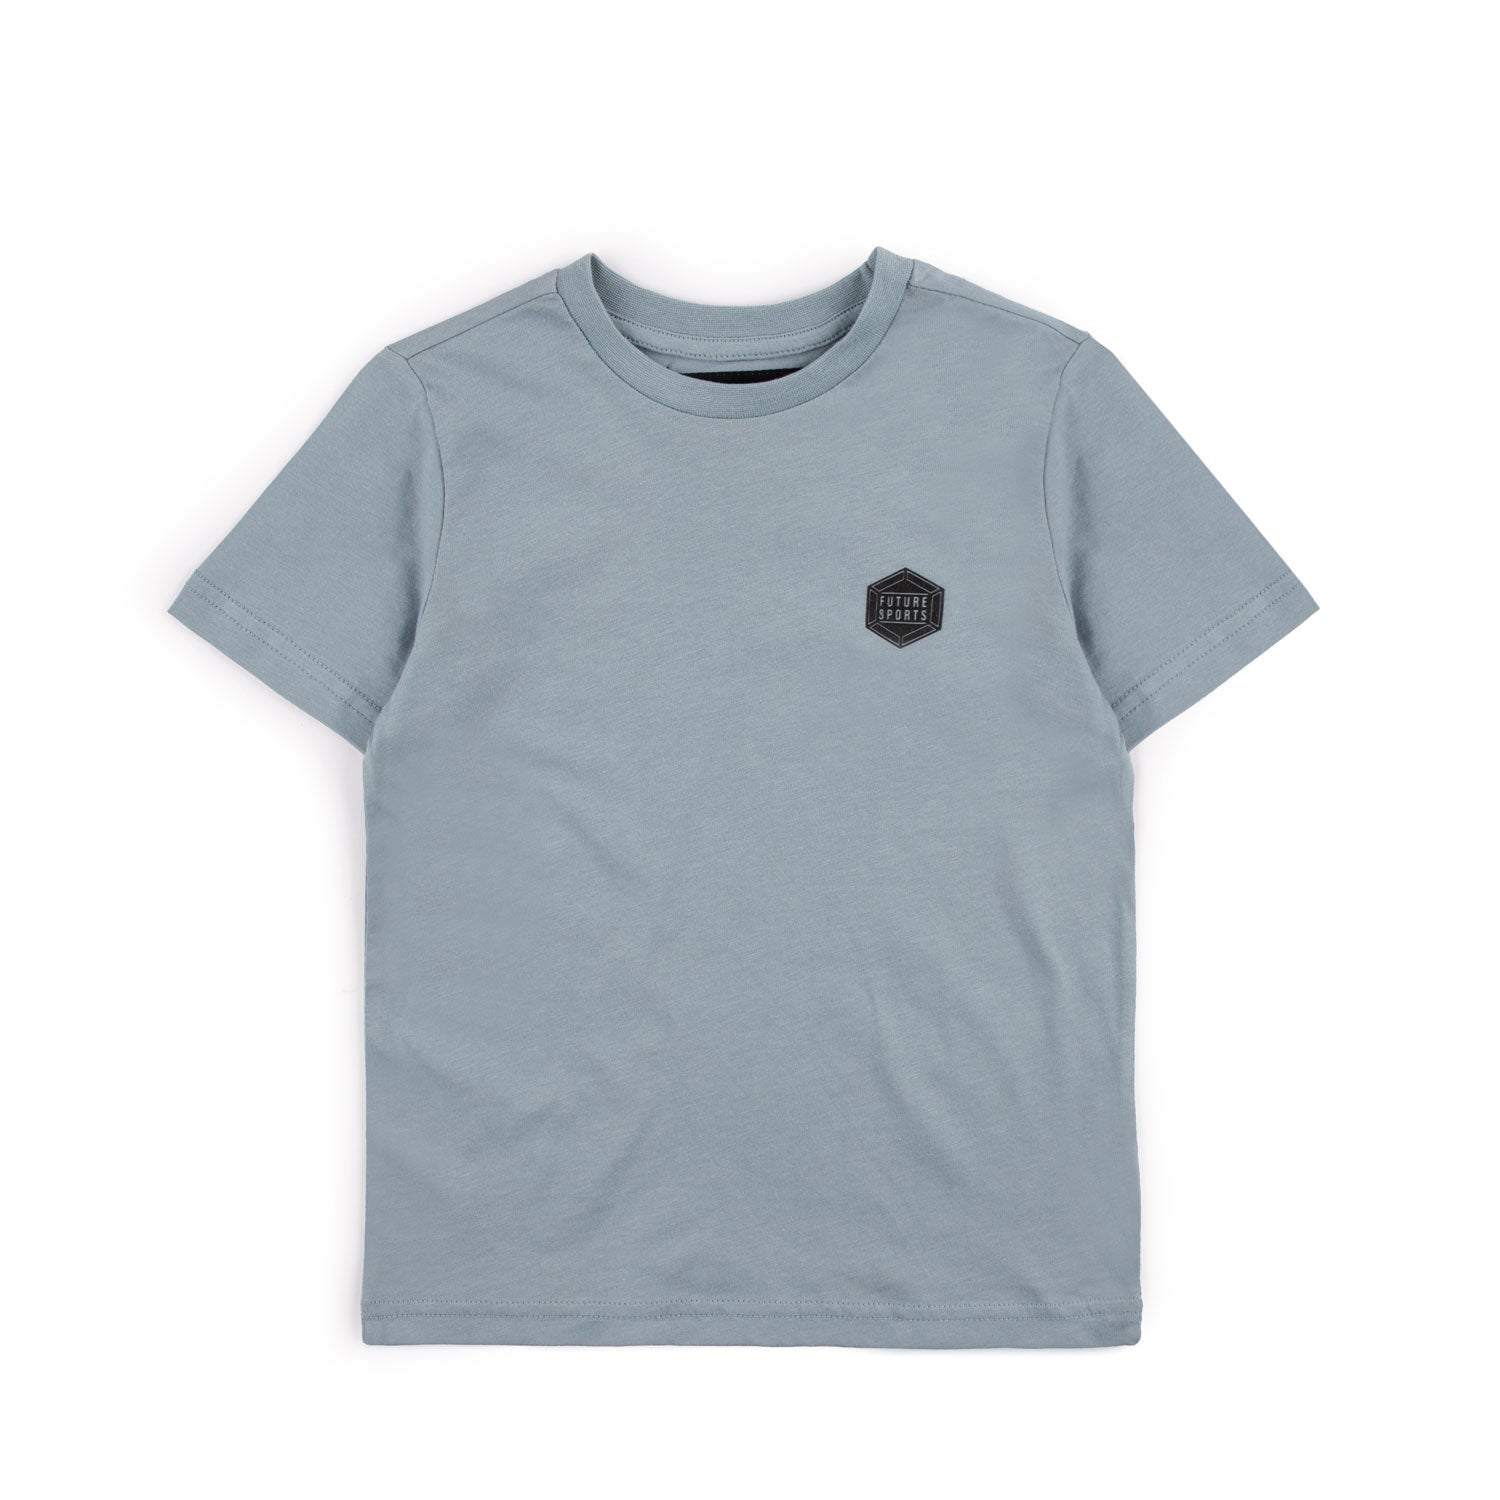 Stone Harbor Boy's Tee Shirt Grey / 5-6 Y BOY'S FUTURE SPORTS GREY TEE SHIRT